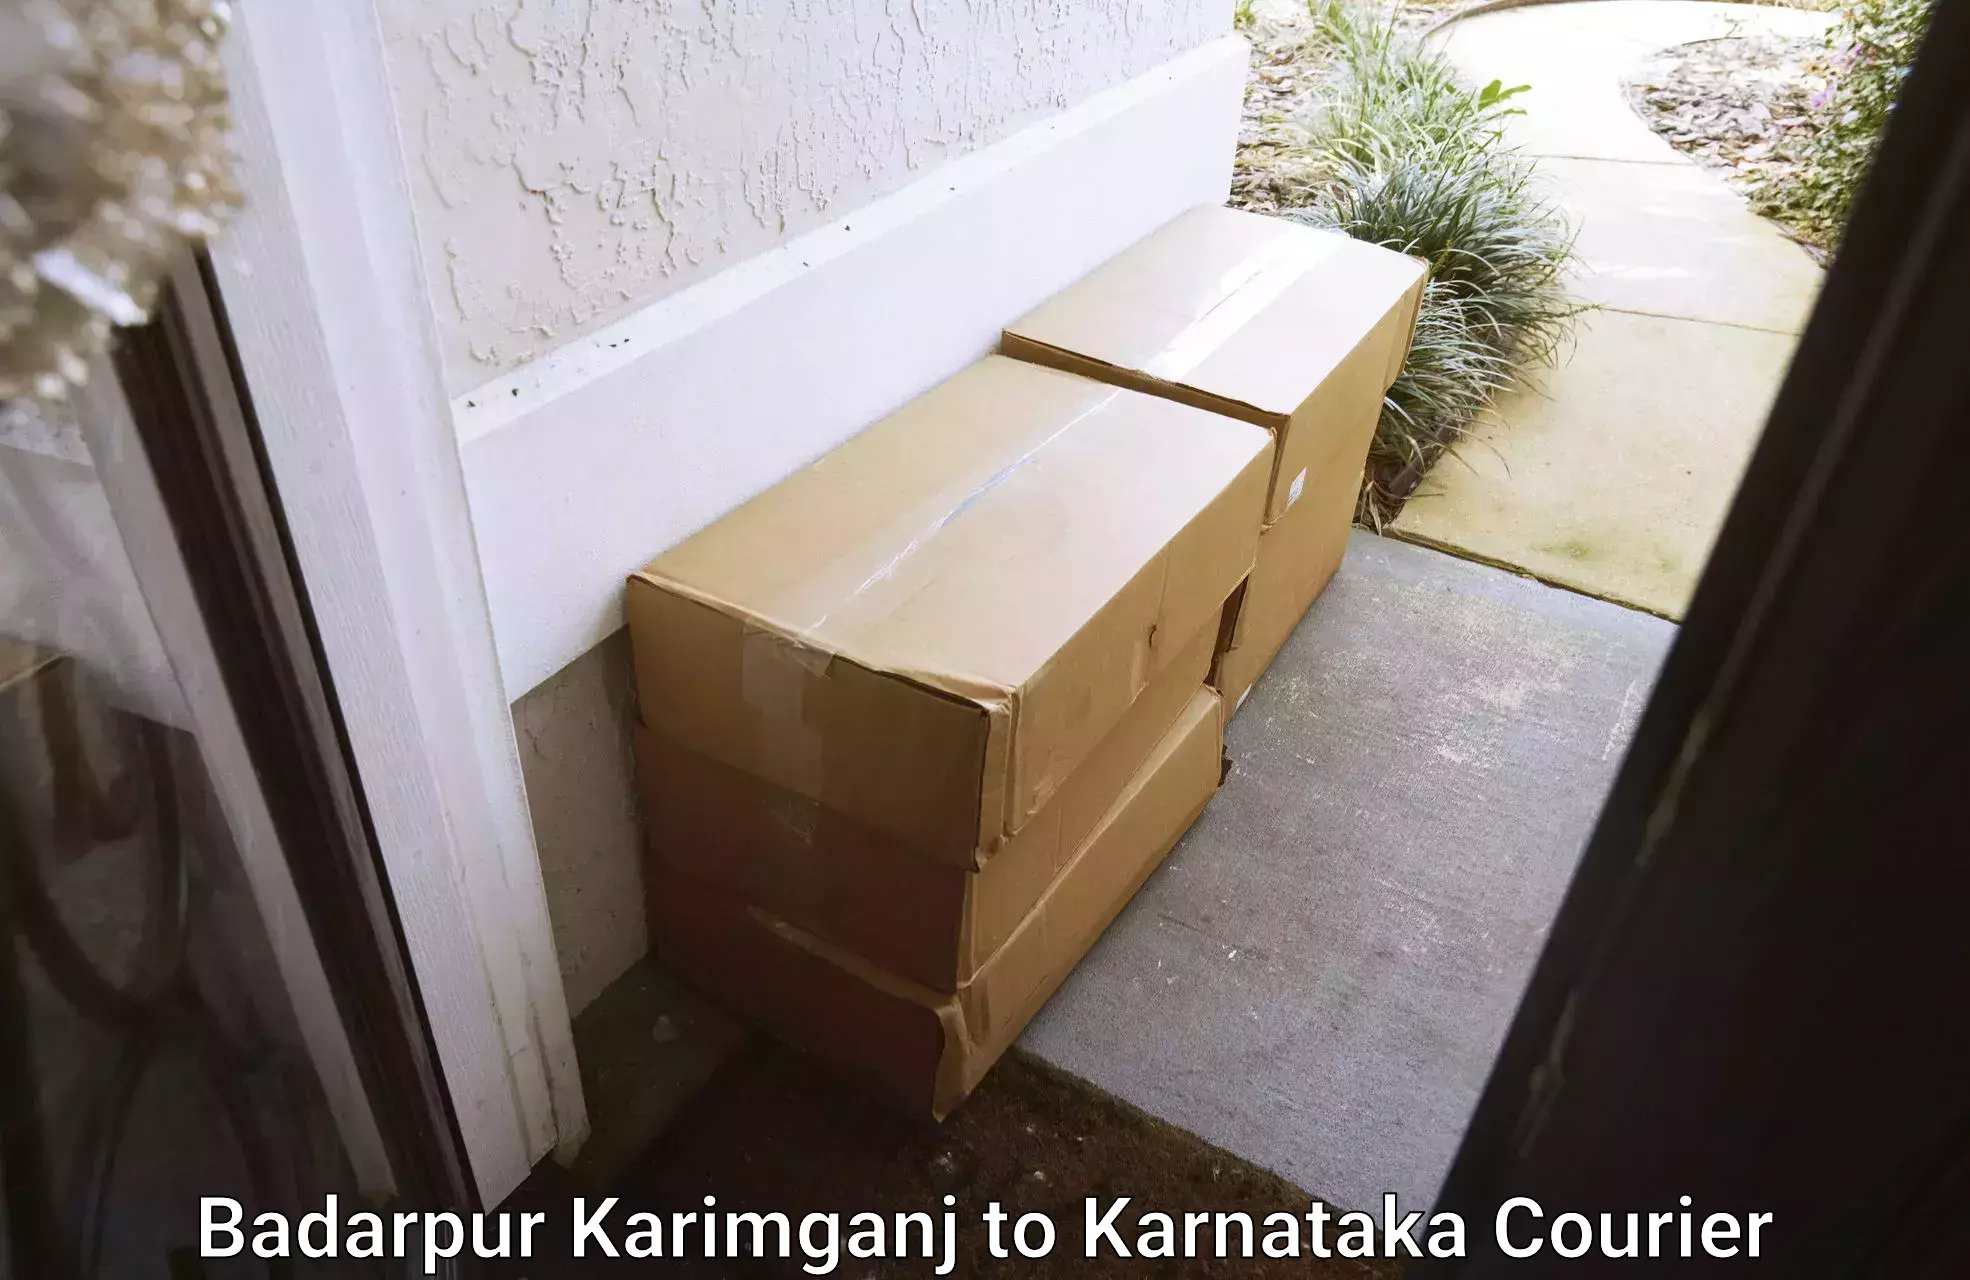 Reliable courier service Badarpur Karimganj to Saraswathipuram